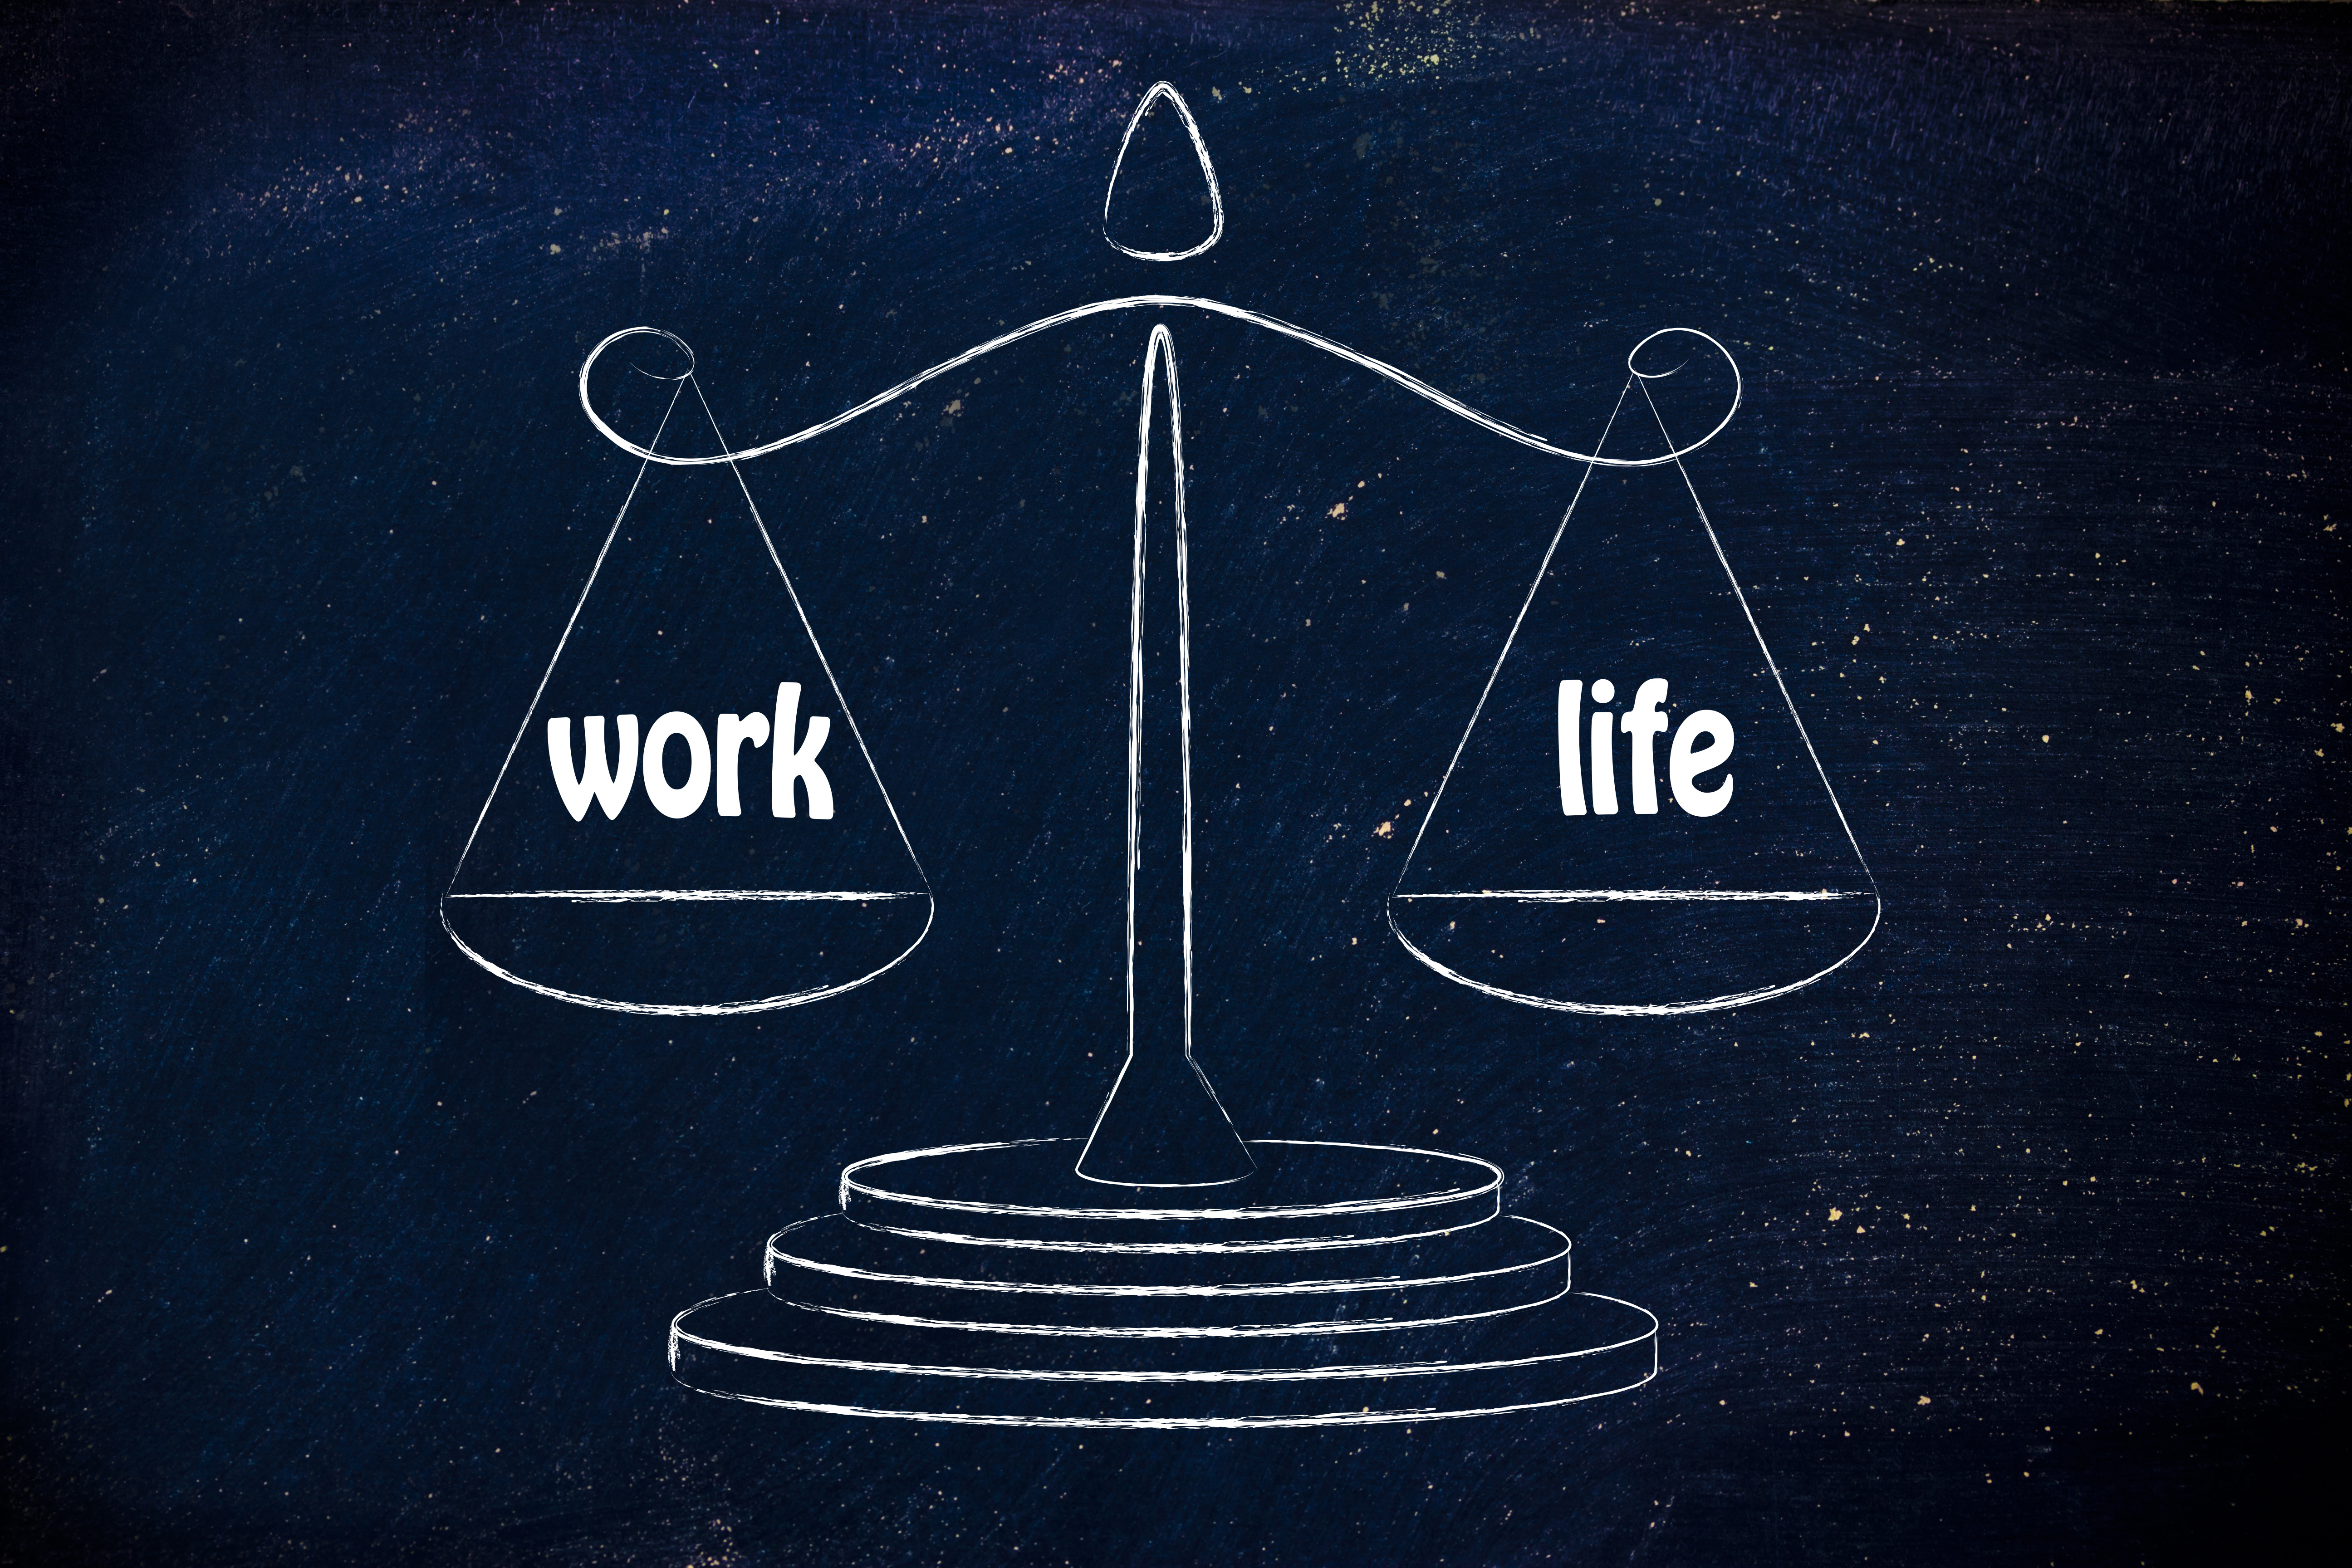 work life balance images